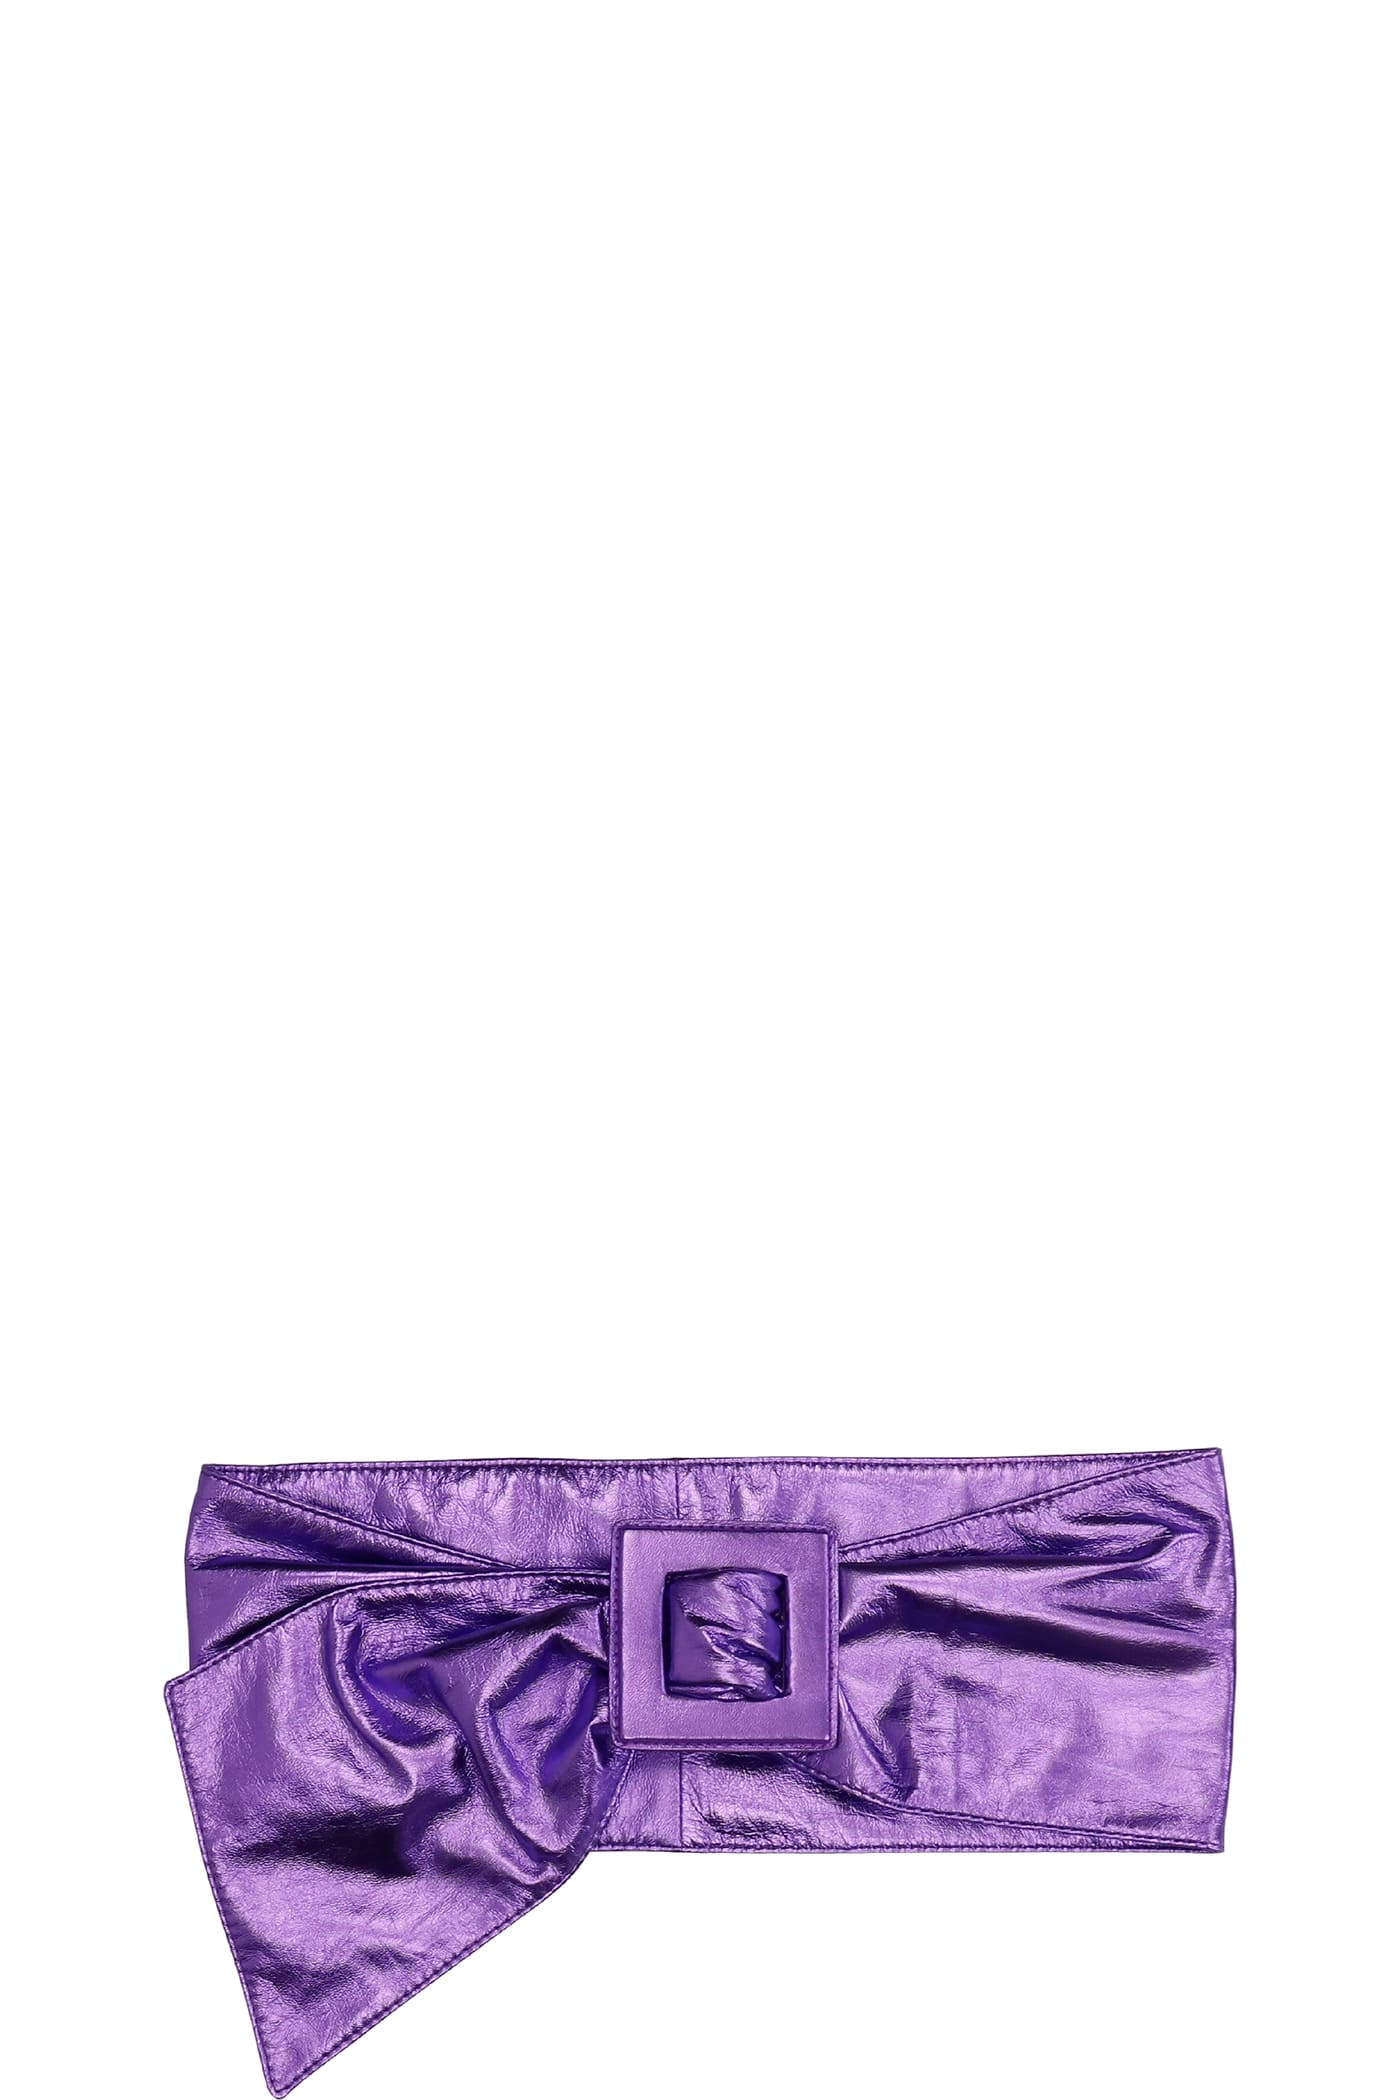 Alexandre Vauthier Belts In Viola Leather